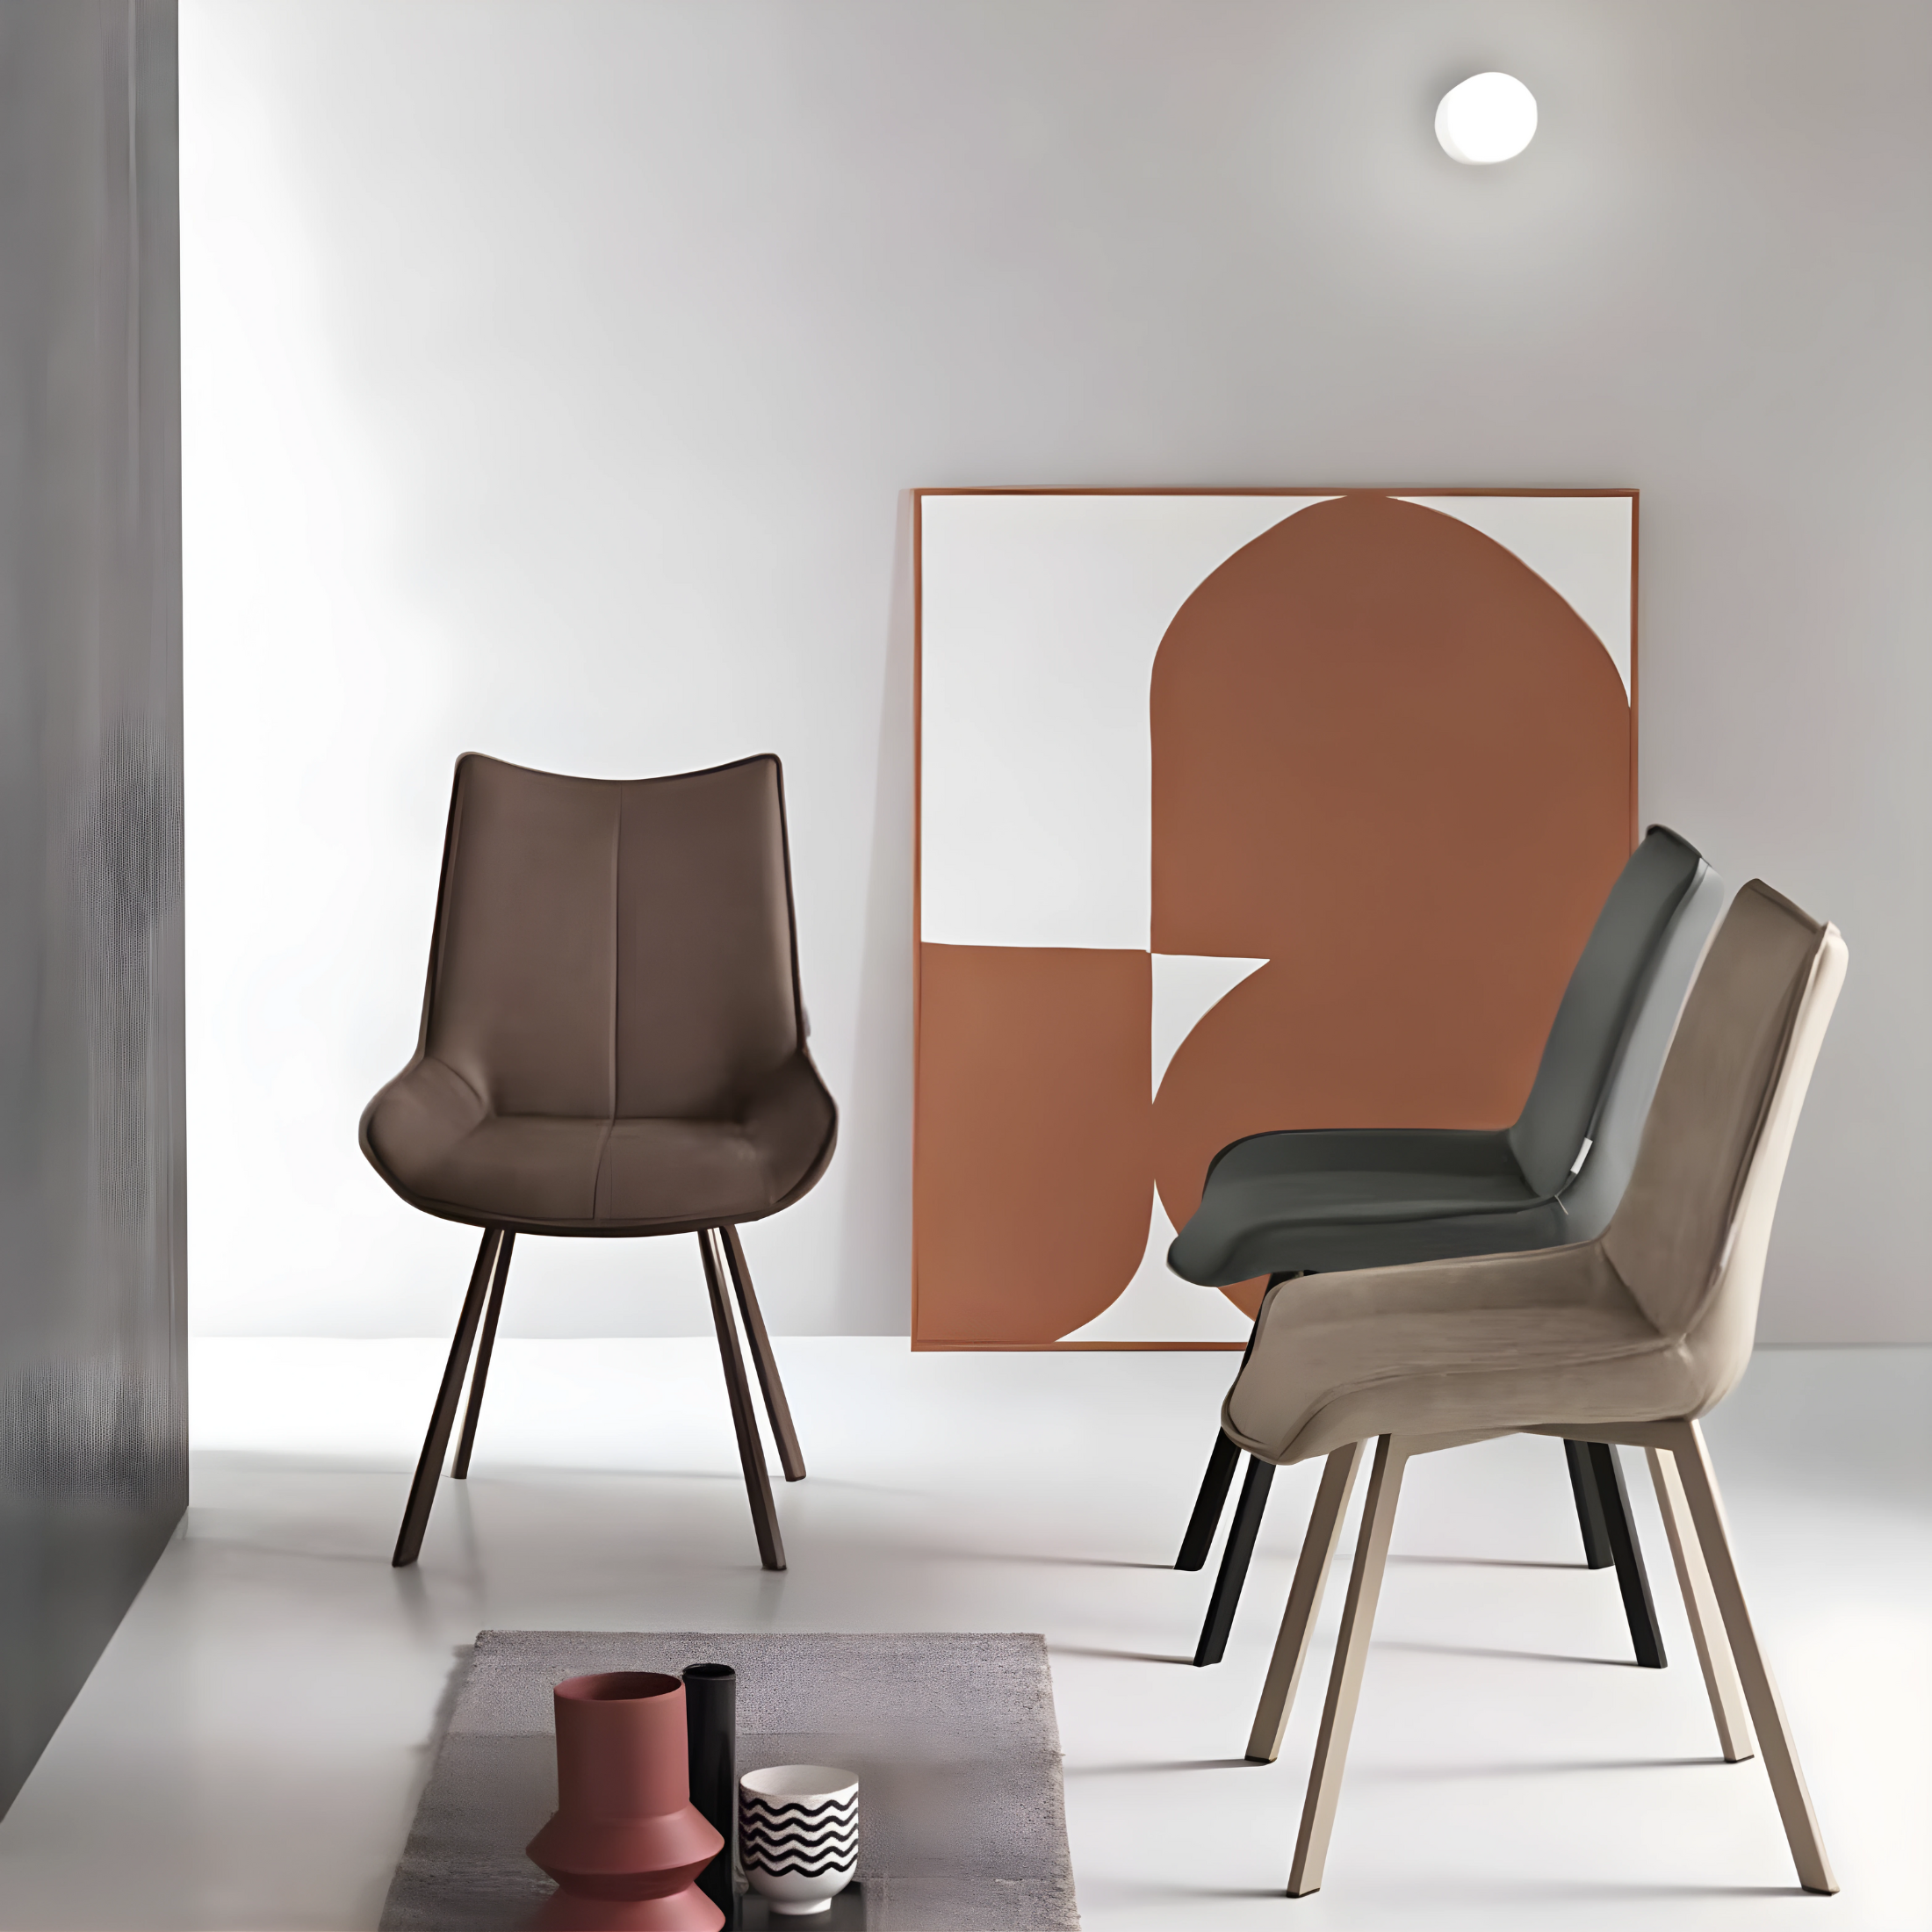 Set di sedie moderne in ecopelle imbottite "Clodia" con gambe metallo verniciato cm 55x62 89h